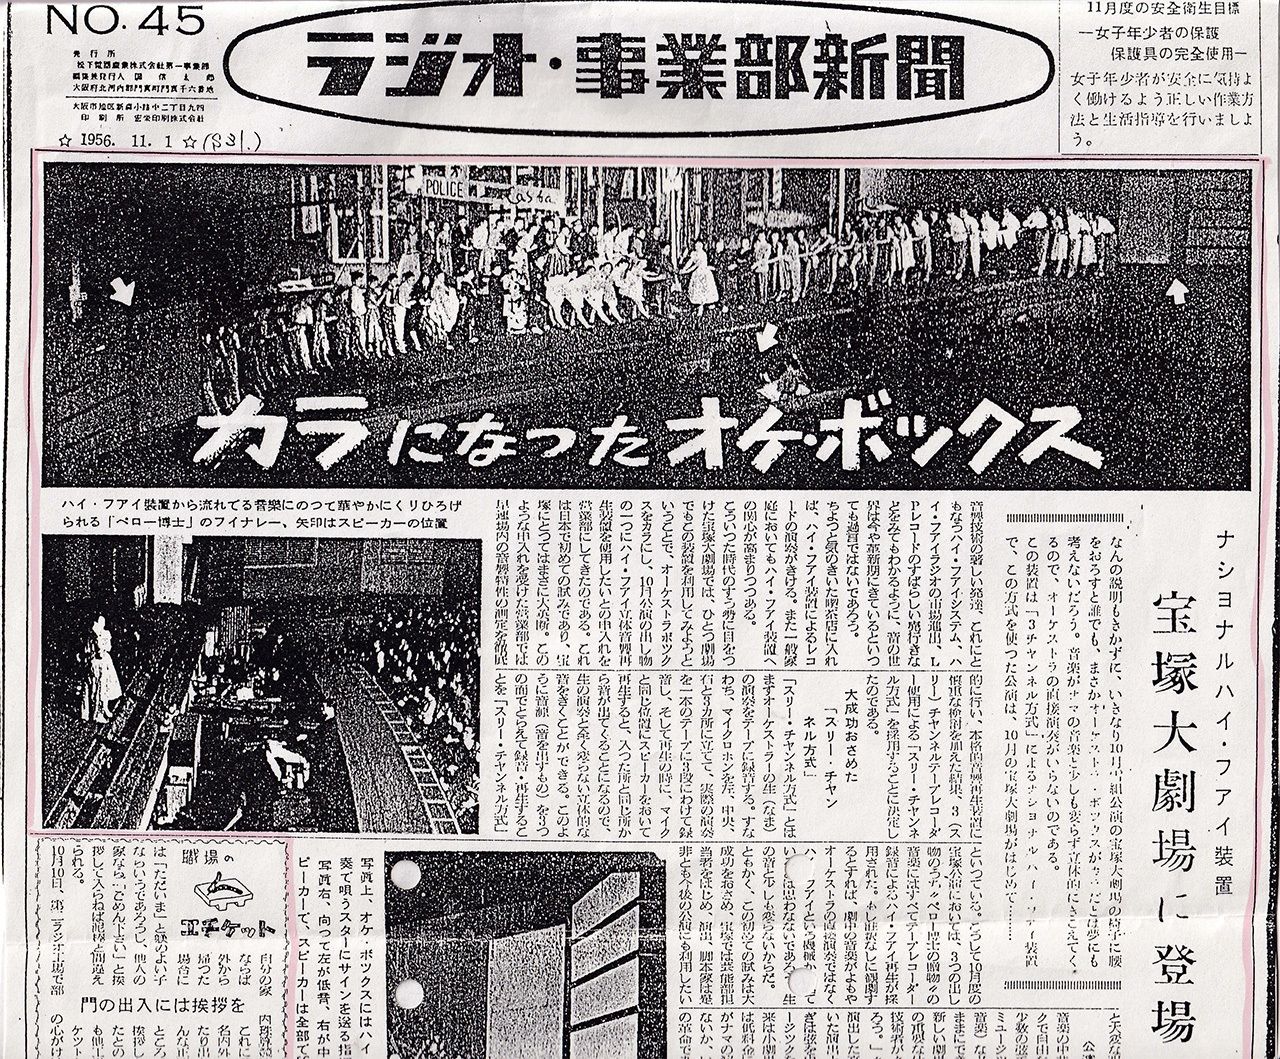 A report on the Takarazuka Revue’s use of Matsushita equipment to replace their absent orchestra in the Rajio-Jigyōbu Shinbun (November 1, 1956). (Courtesy Maekawa Yōichirō)